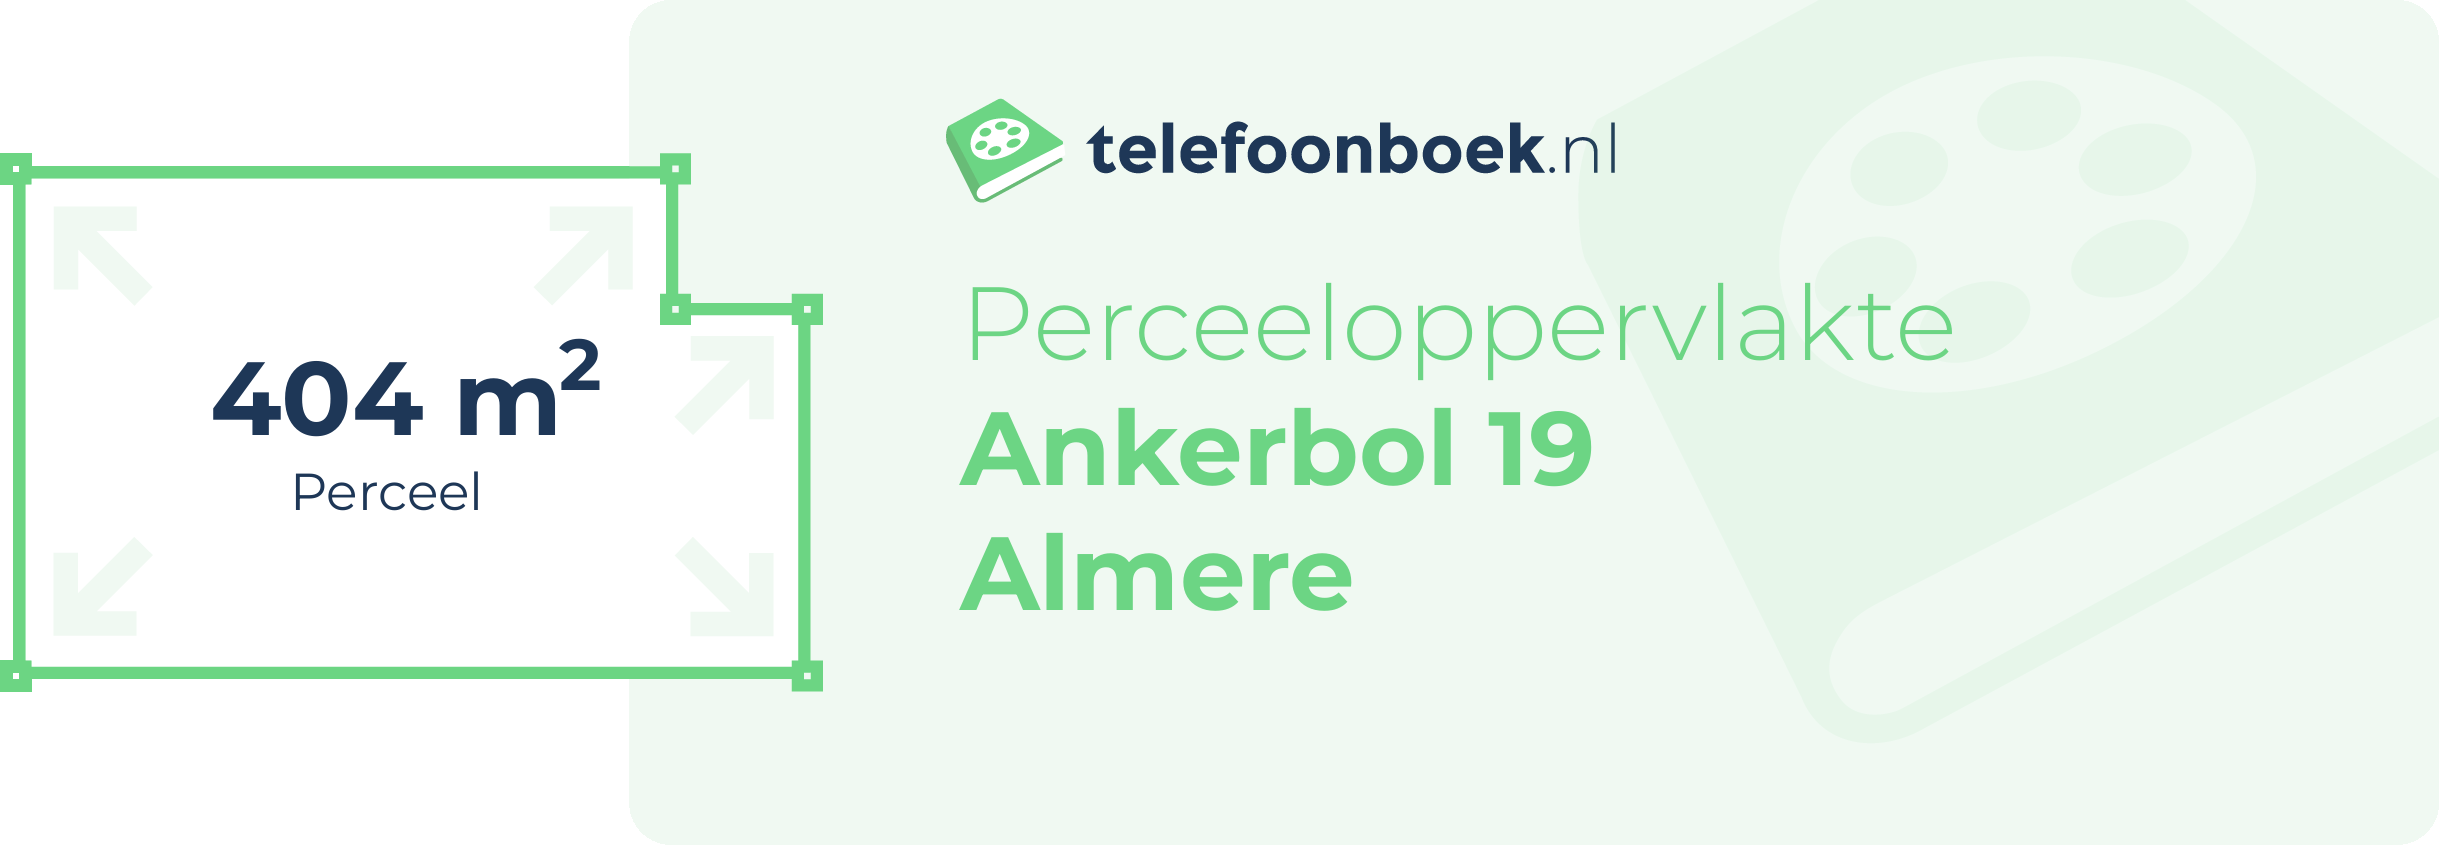 Perceeloppervlakte Ankerbol 19 Almere